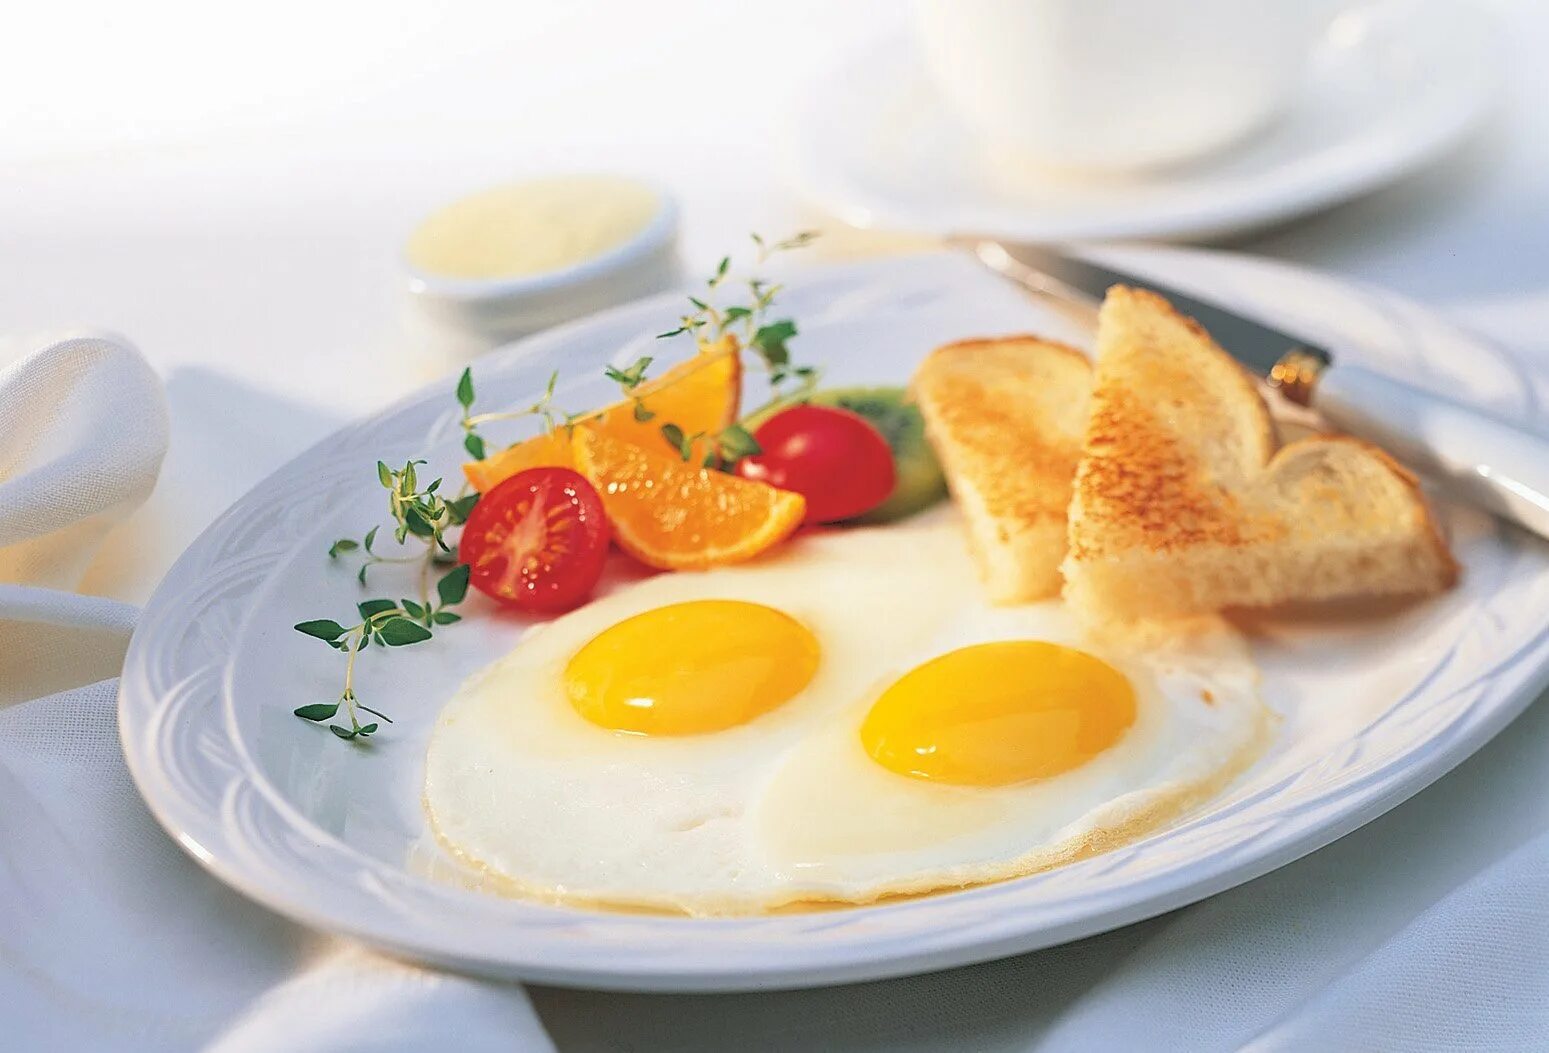 Яичница глазунья 3 яйца. Красивая яичница. Завтрак. Вкусный завтрак. Яичница для завтрака.